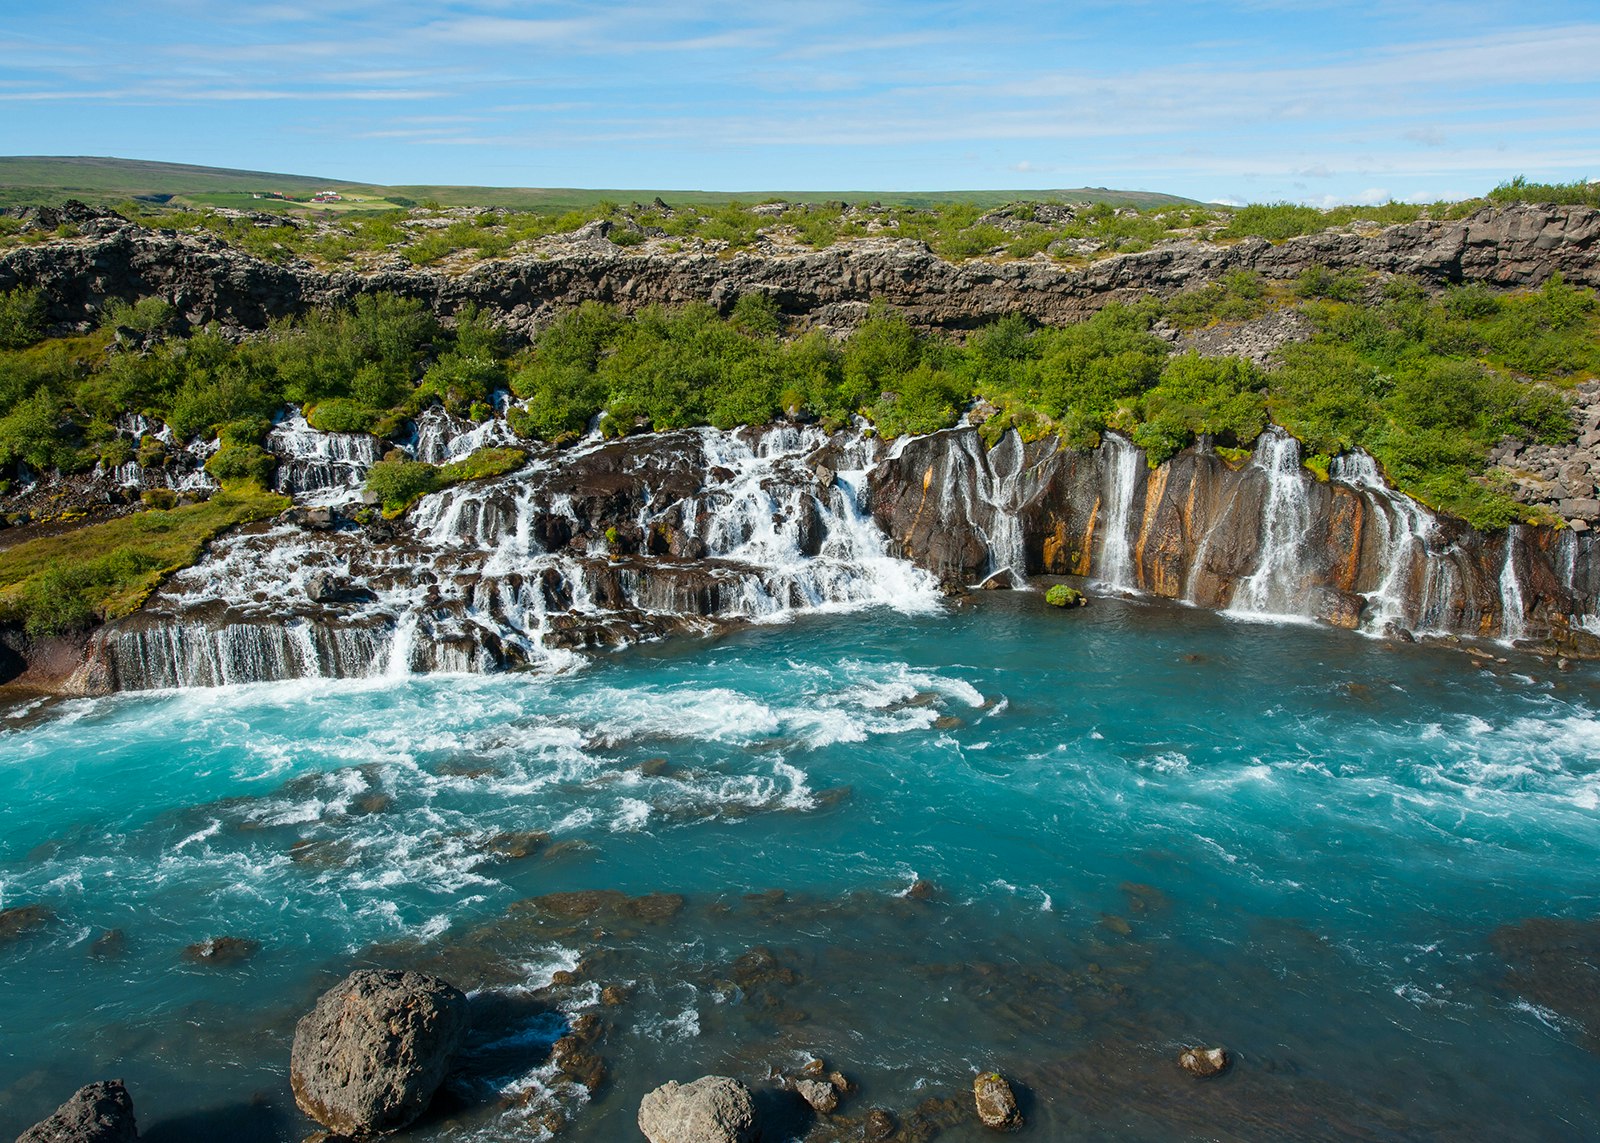 The Hraunfossar waterfall in West Iceland © Filip Fuxa / Shutterstock